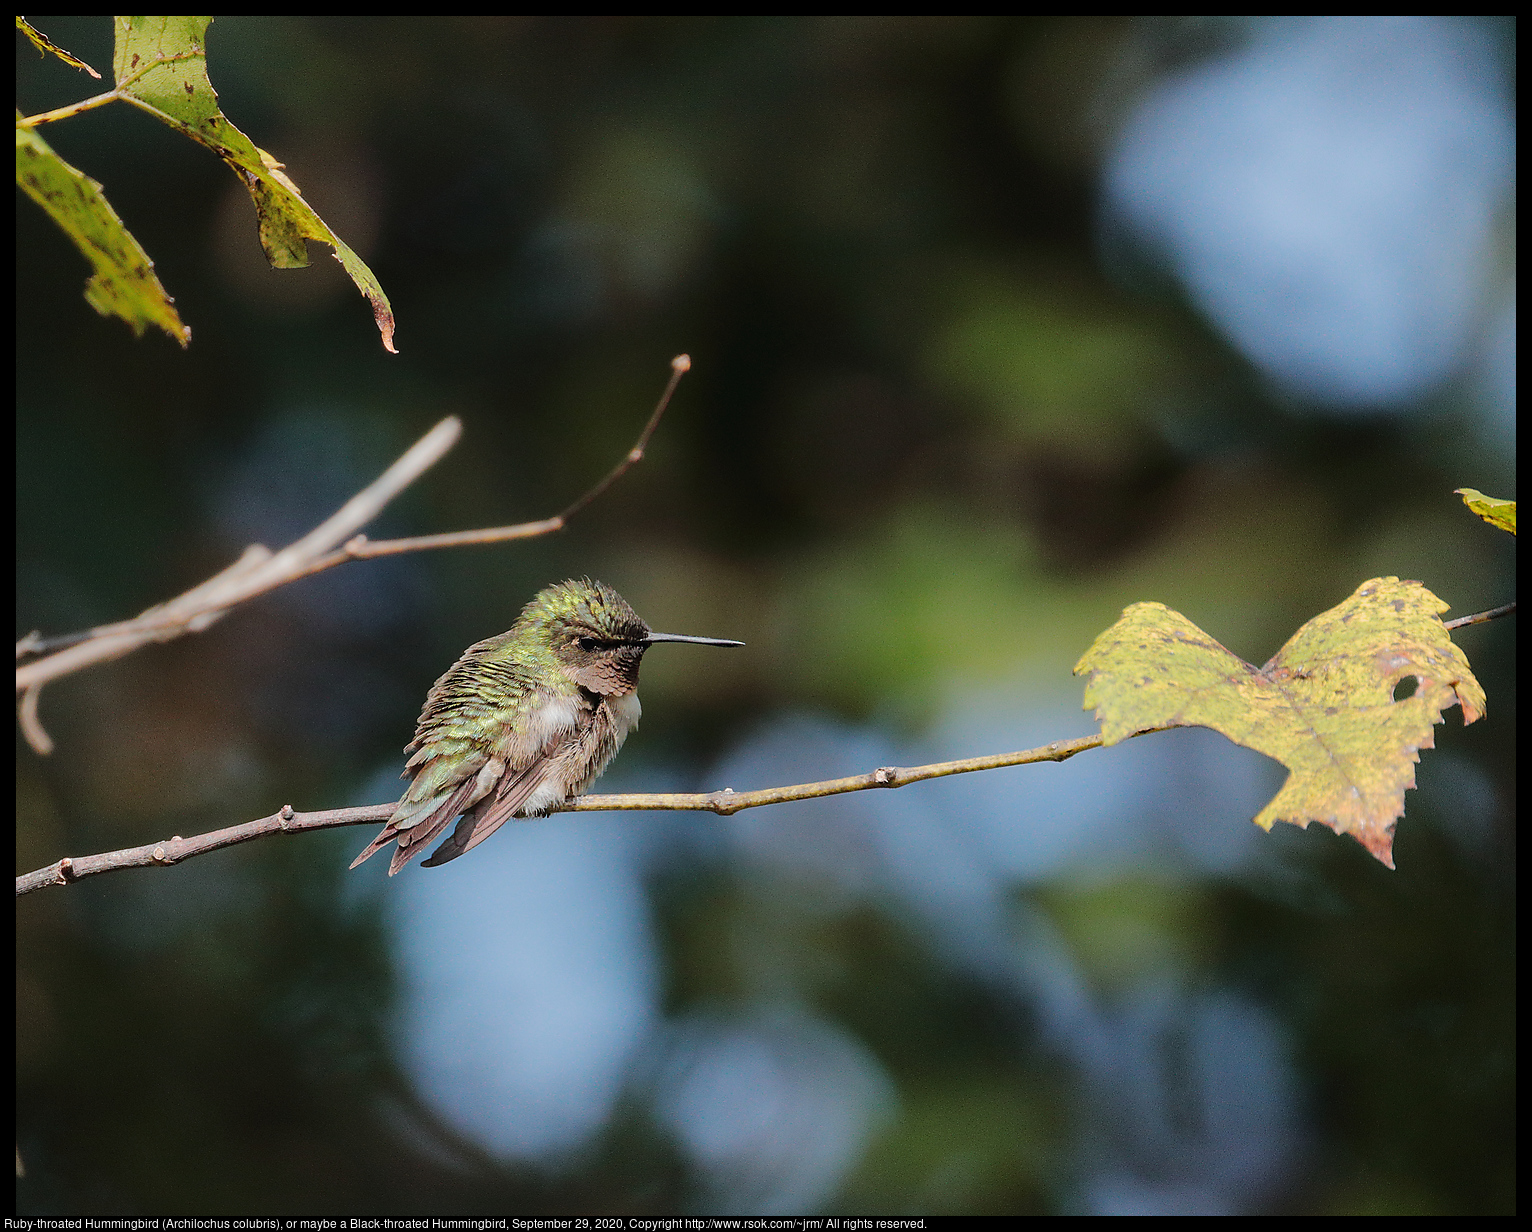 Ruby-throated Hummingbird (Archilochus colubris), or maybe a Black-throated Hummingbird, September 20, 2020